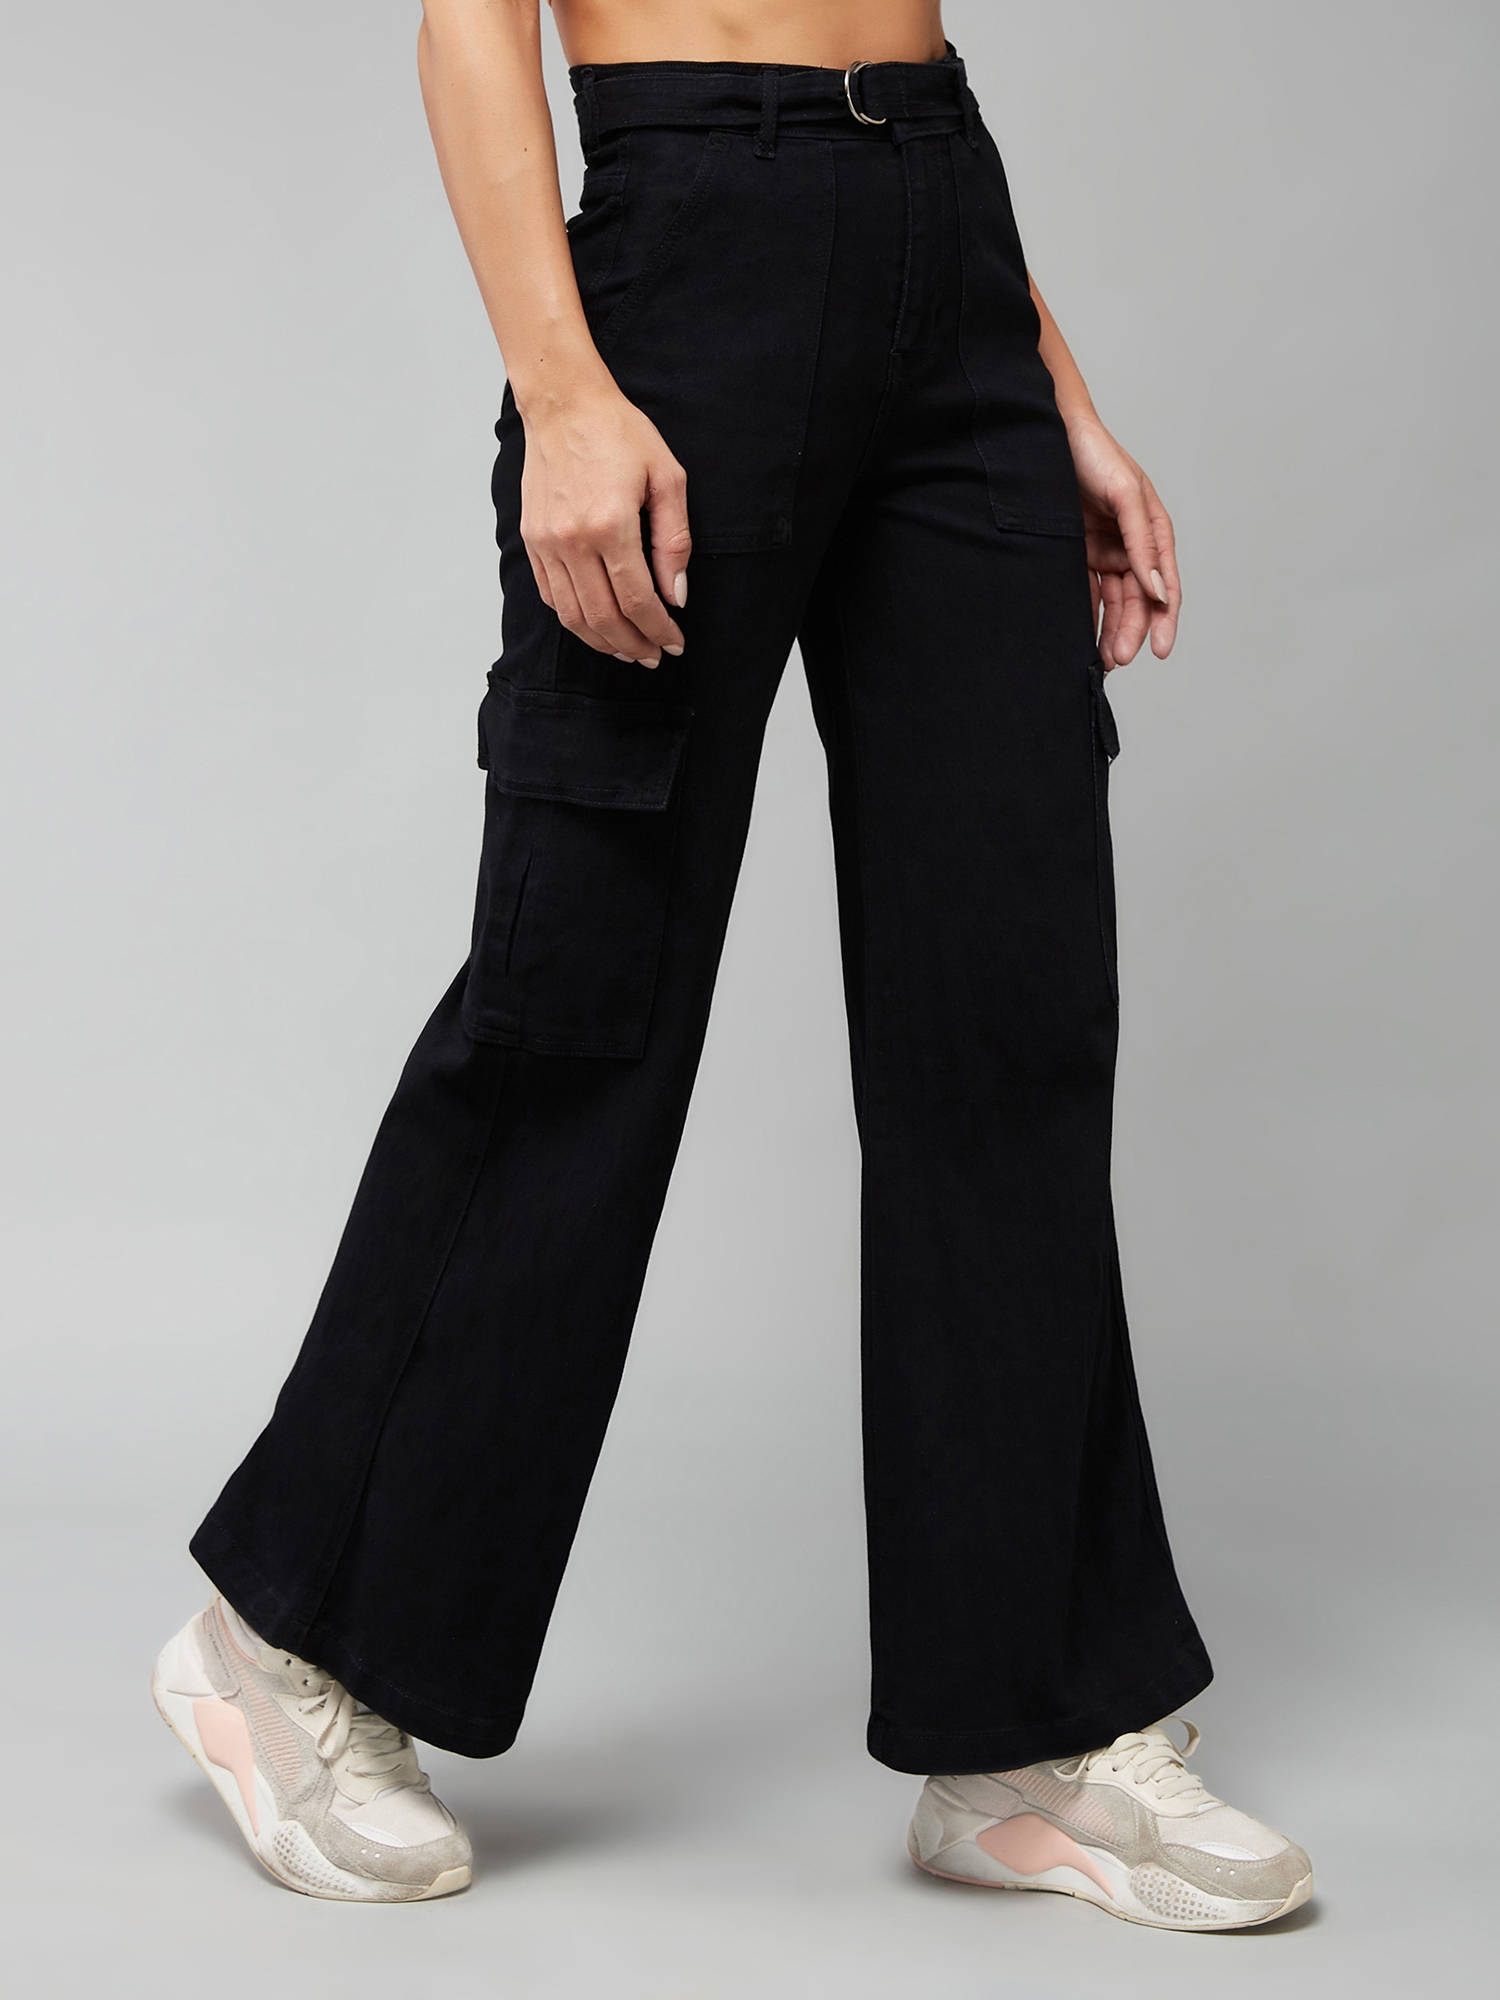 Women's Black Wide leg High rise Clean look Regular Stretchable Denim Jeans